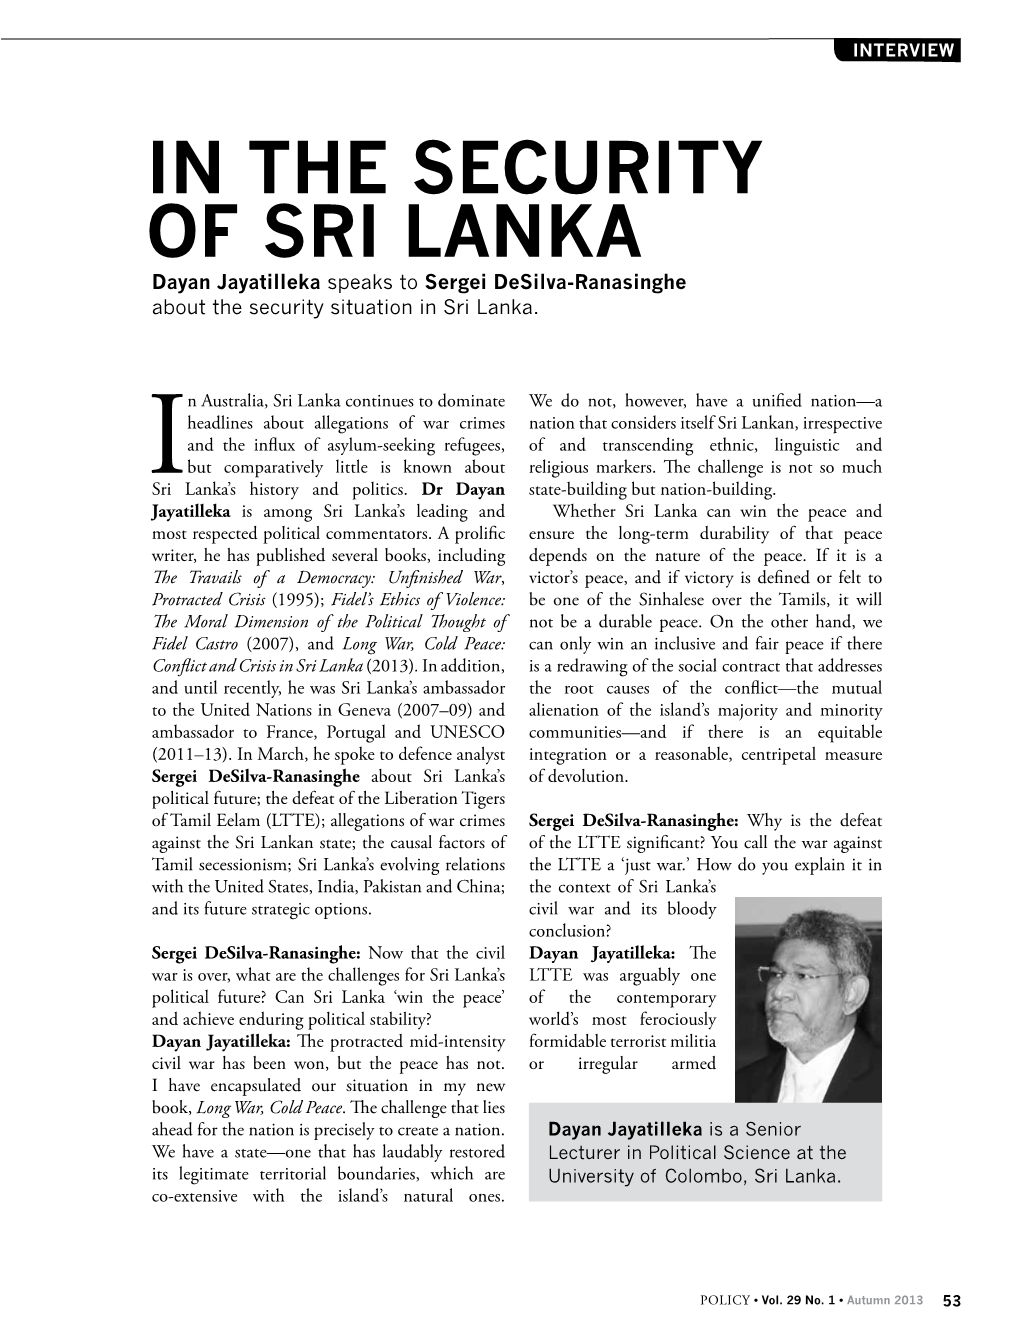 IN the SECURITY of SRI LANKA Dayan Jayatilleka Speaks to Sergei Desilva-Ranasinghe About the Security Situation in Sri Lanka